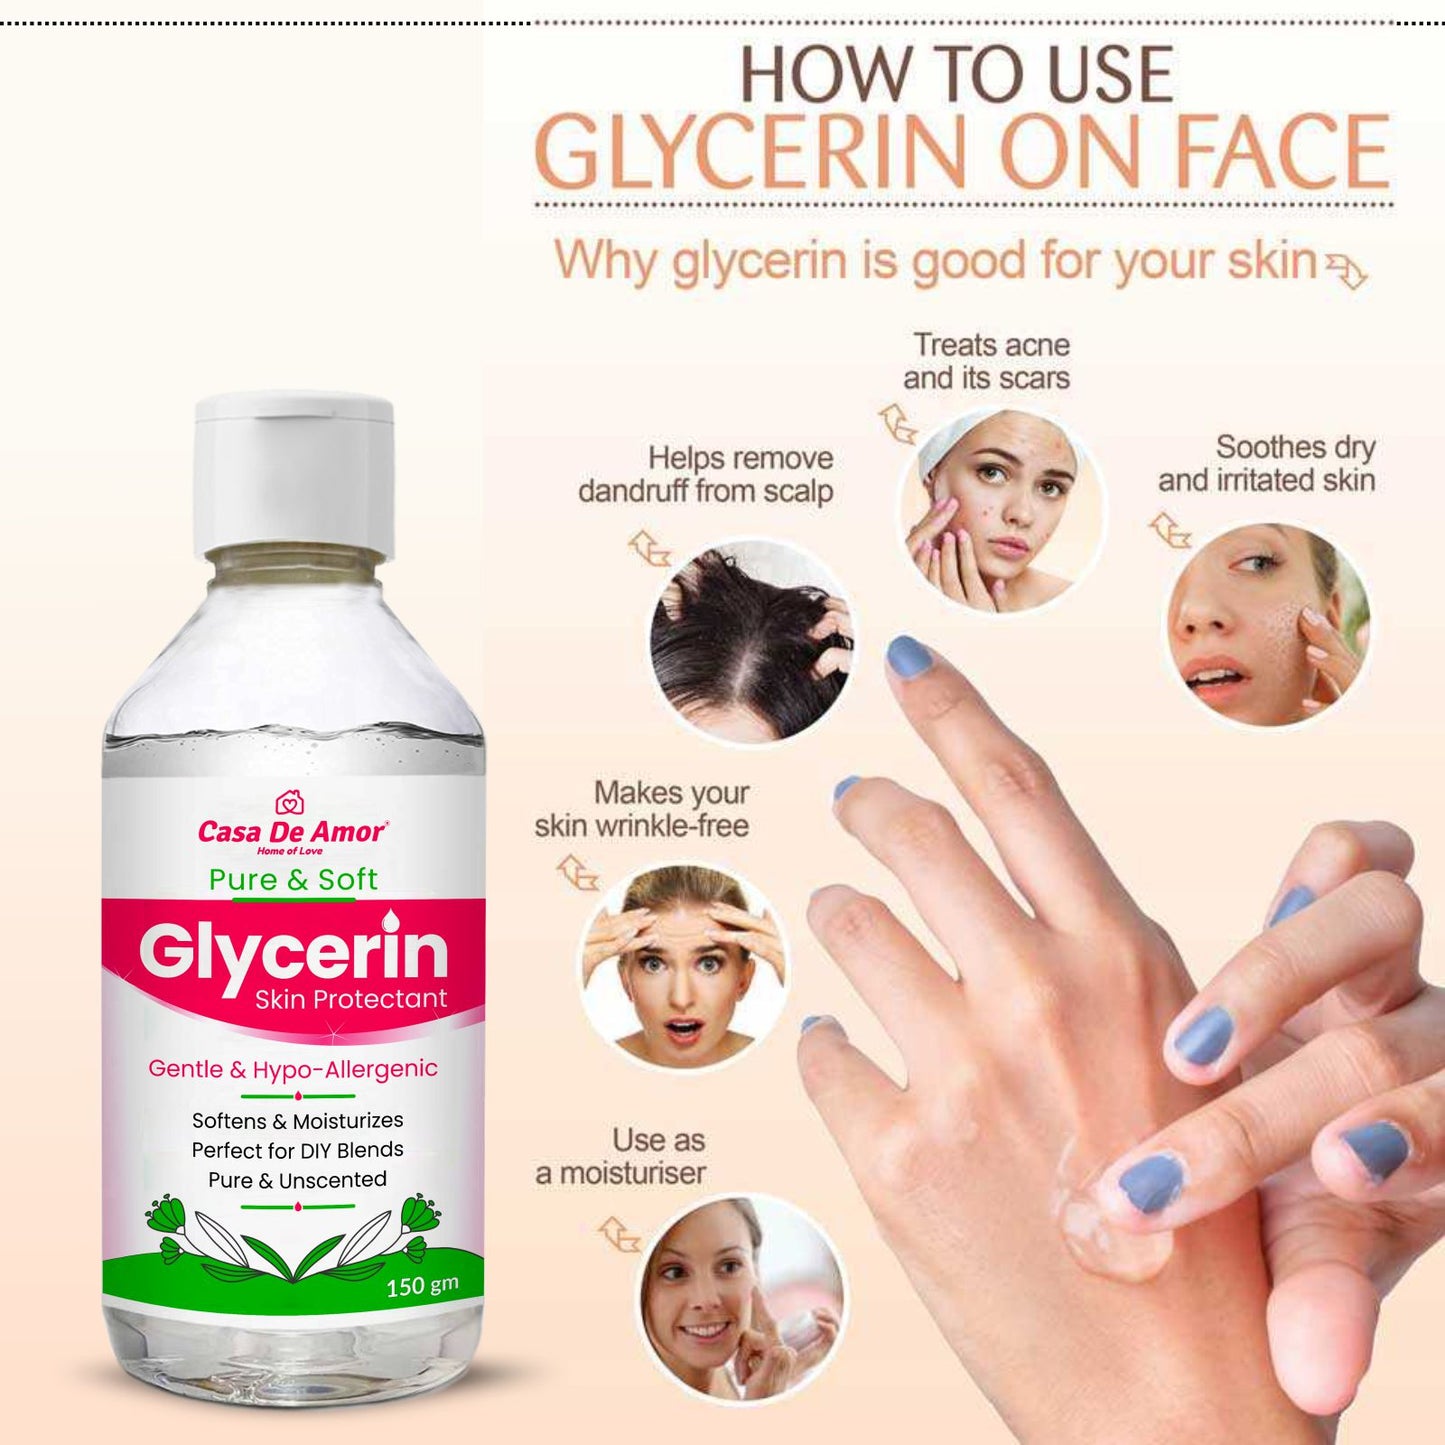 Casa De Amor Glycerin Pure Liquid For Soft & Moisturize Skin, Anti-Aging, Face, Lips, DIY, Soap Making, Beauty & Skin Care